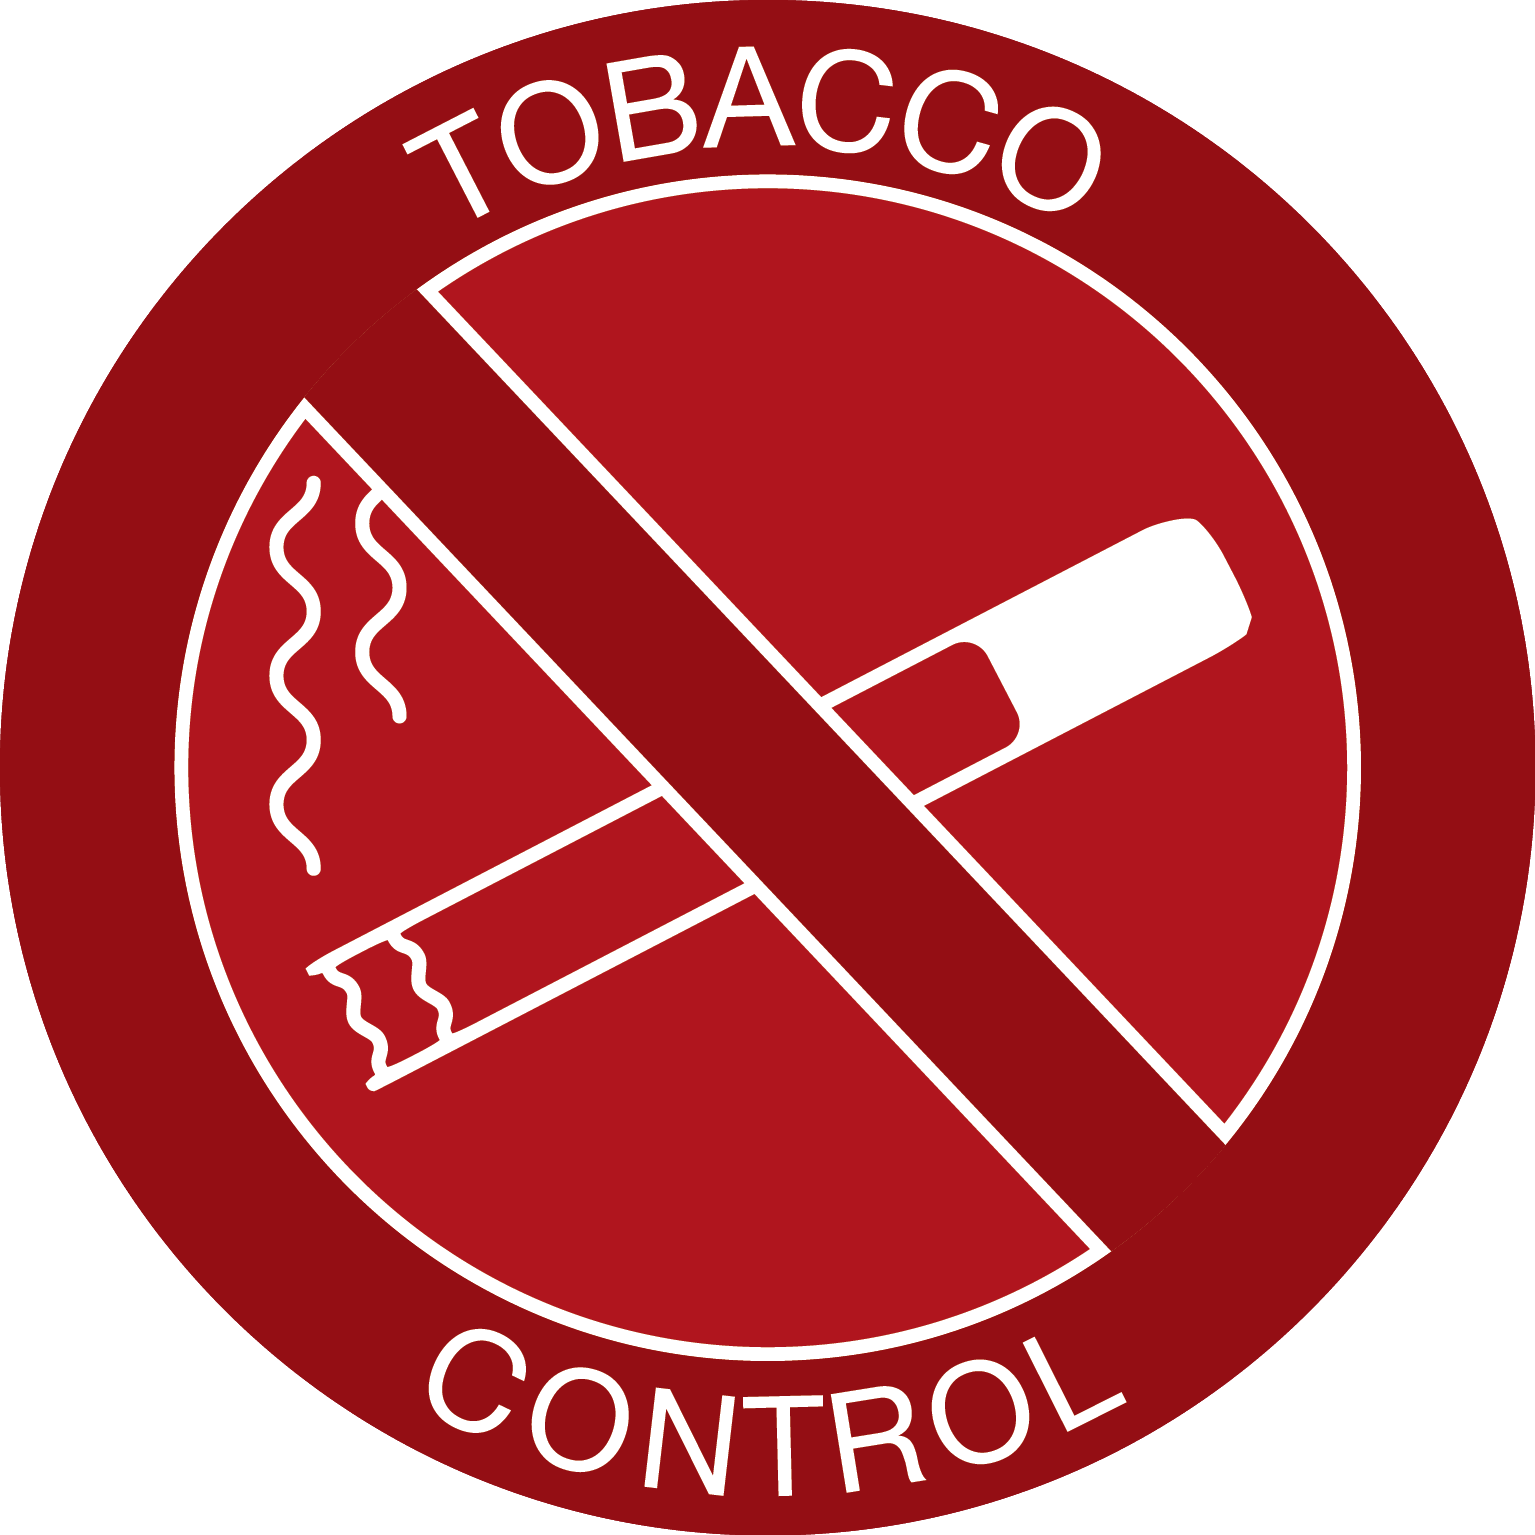 drugs clipart tobacco